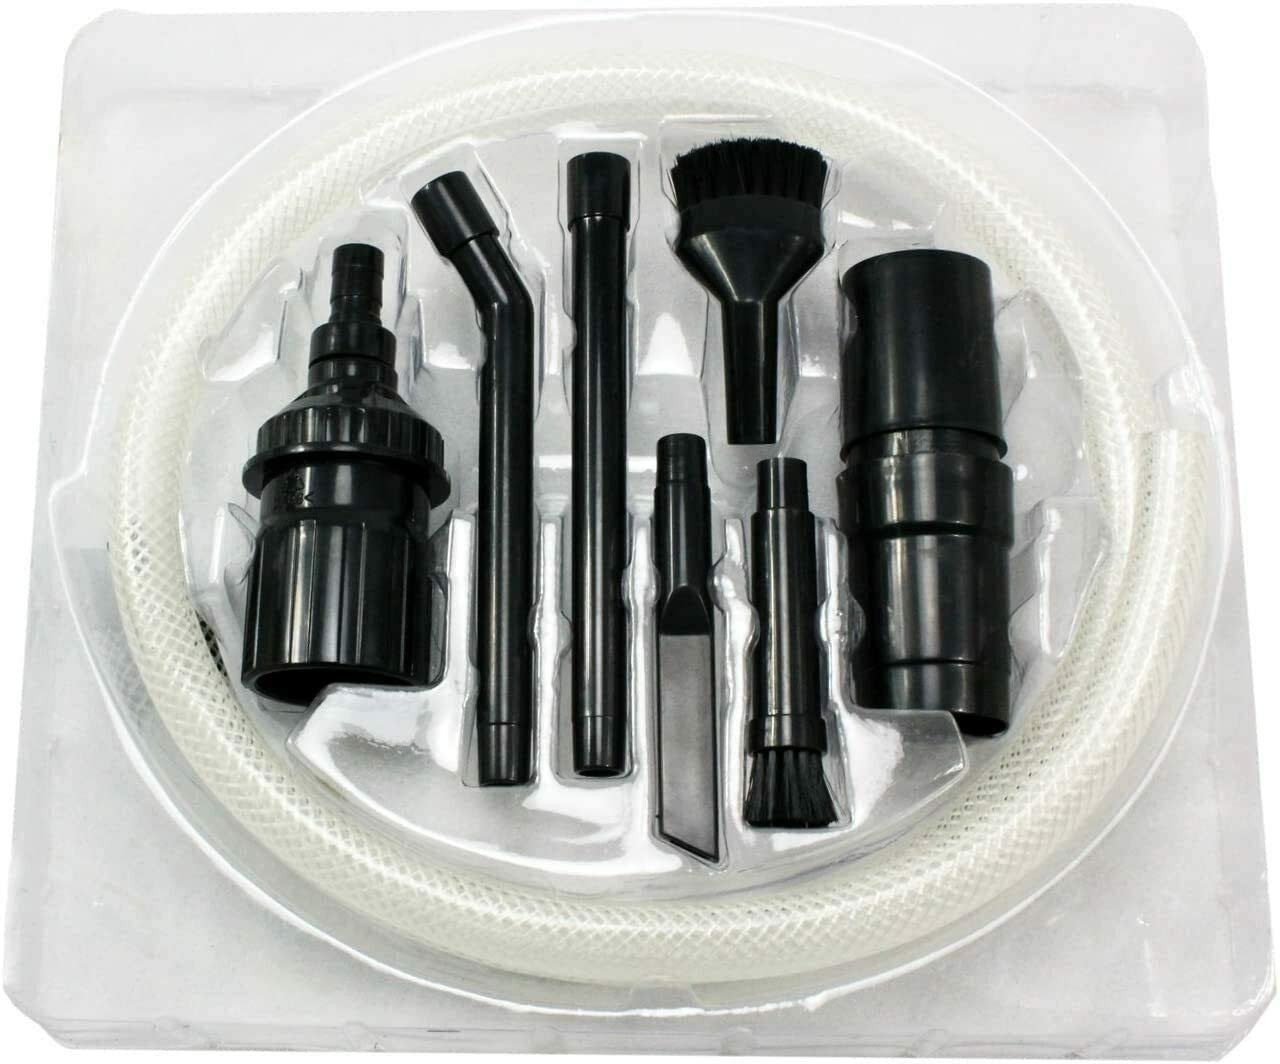 Telescopic Rod & Mini Brush Tool Kit for VAX Vacuum Cleaners (32mm Diameter)